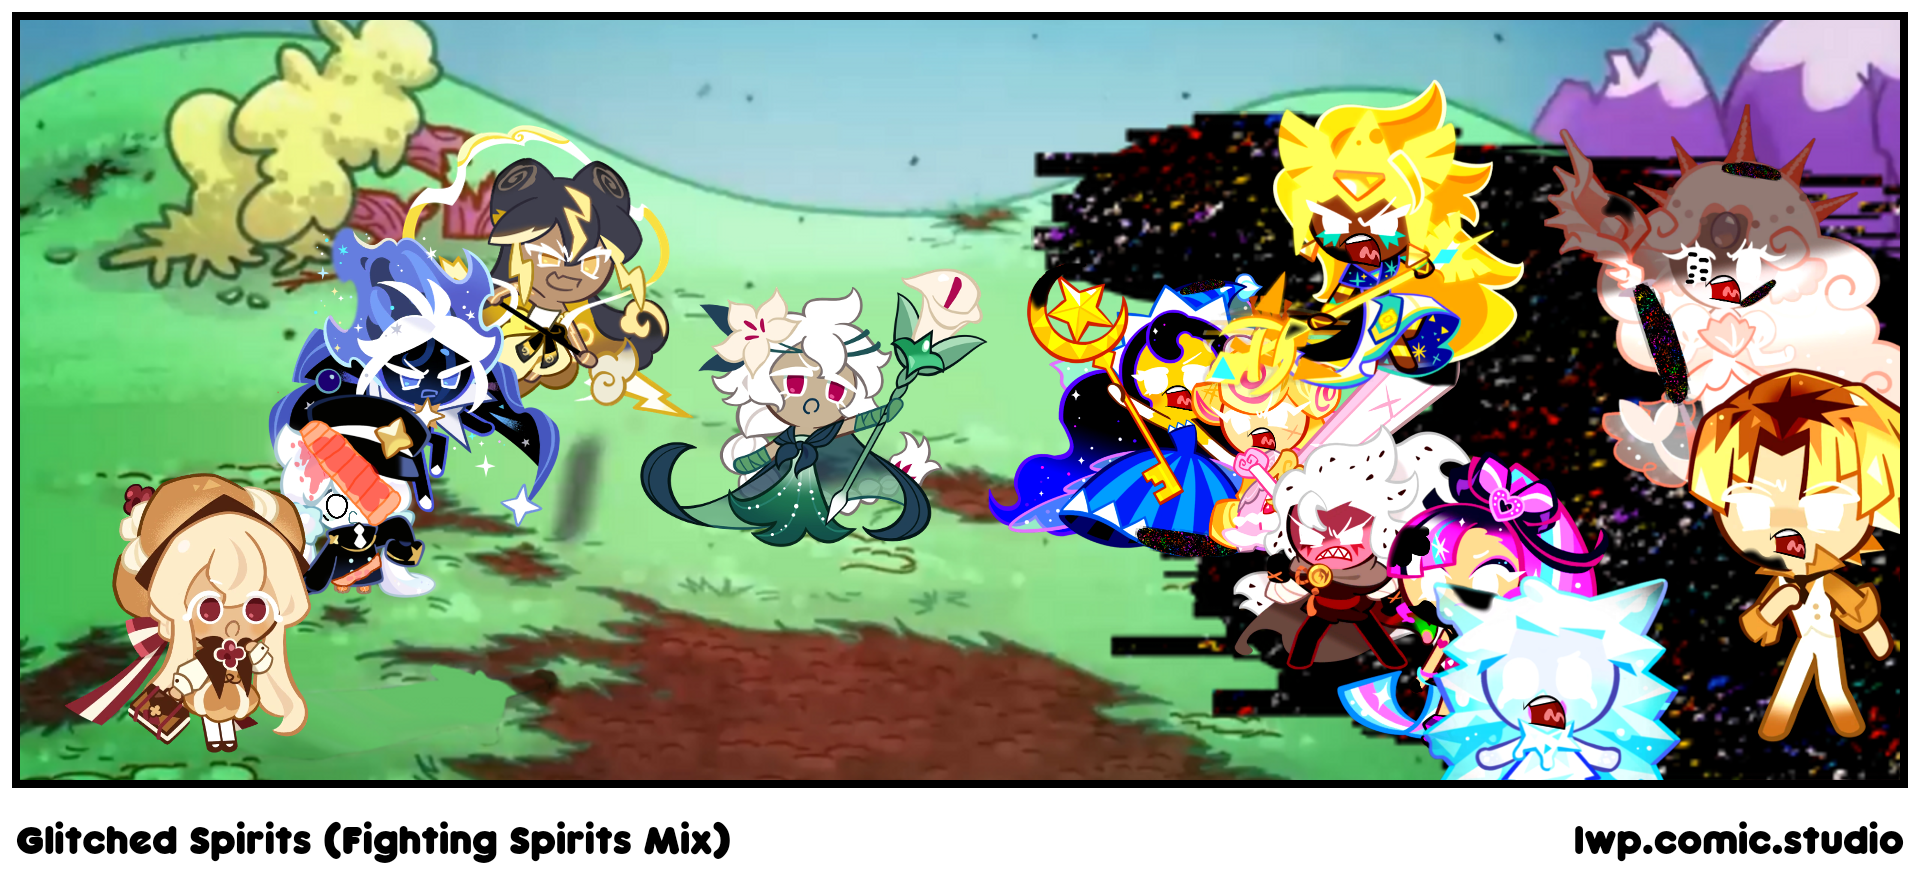 Glitched Spirits (Fighting Spirits Mix)